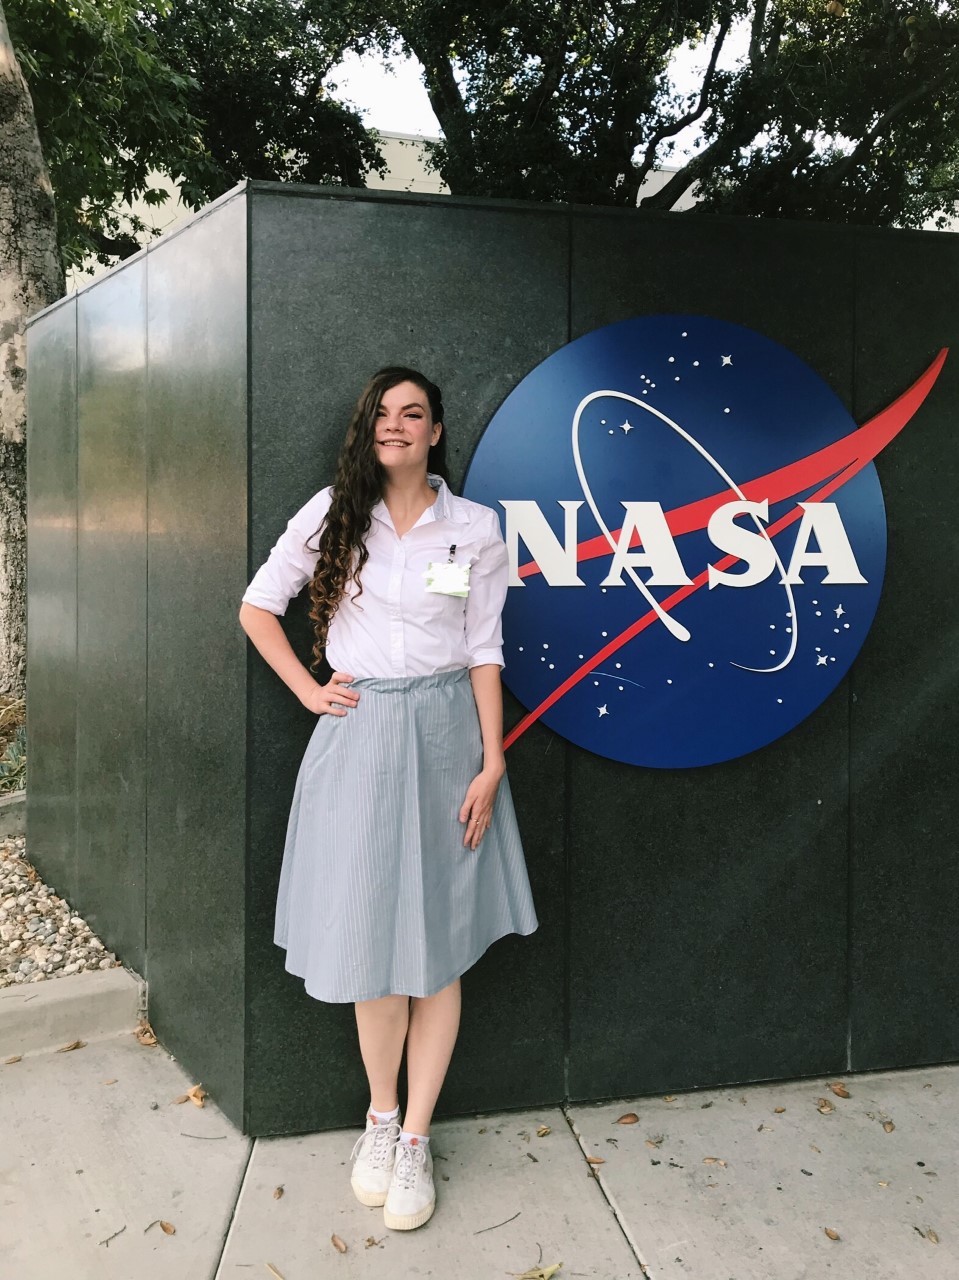 Deborah poses for photo outside of NASA